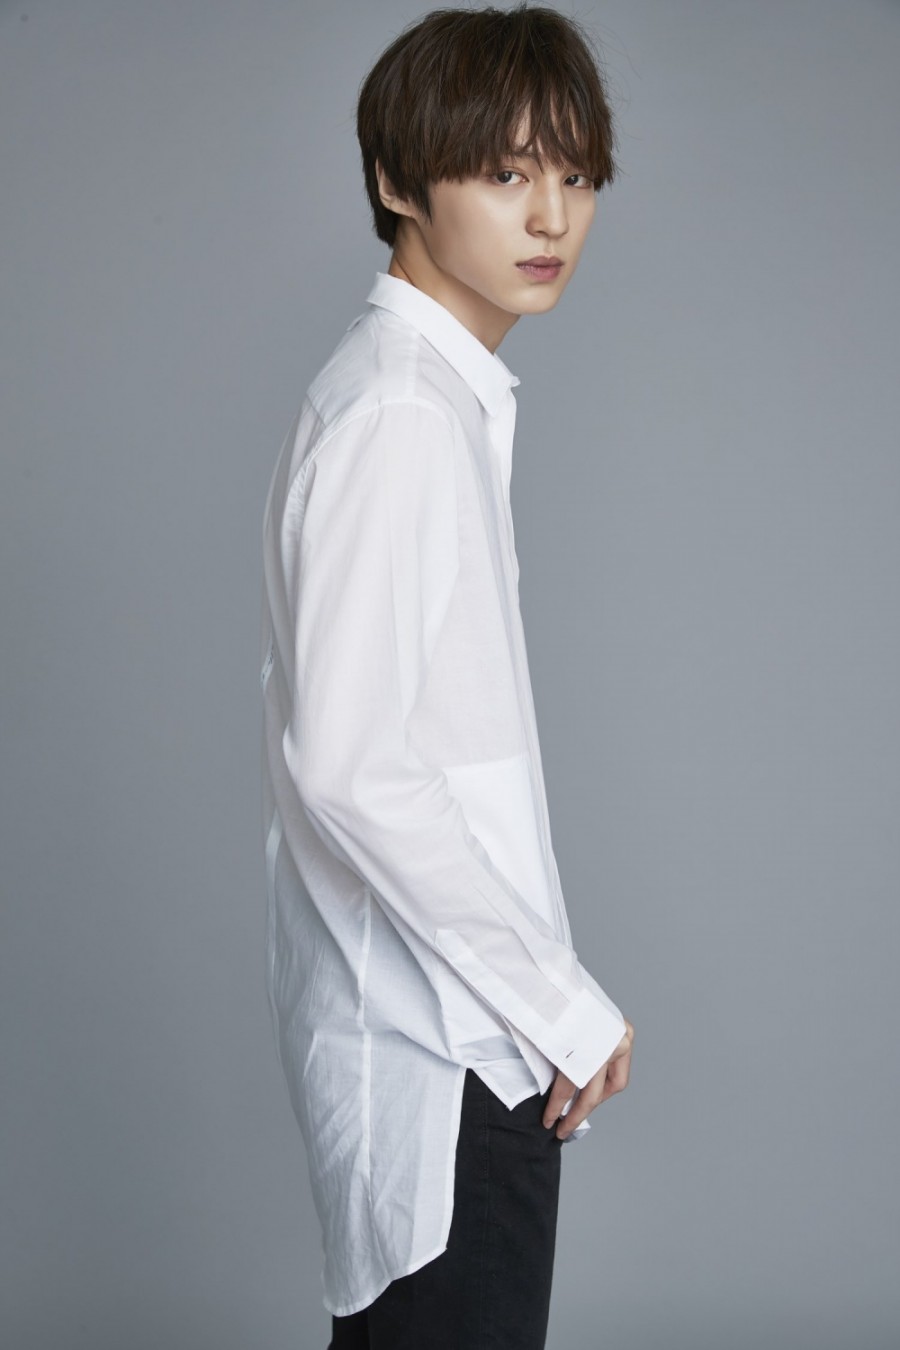 Choi Jae Hyun Profile dan Fakta Lengkap